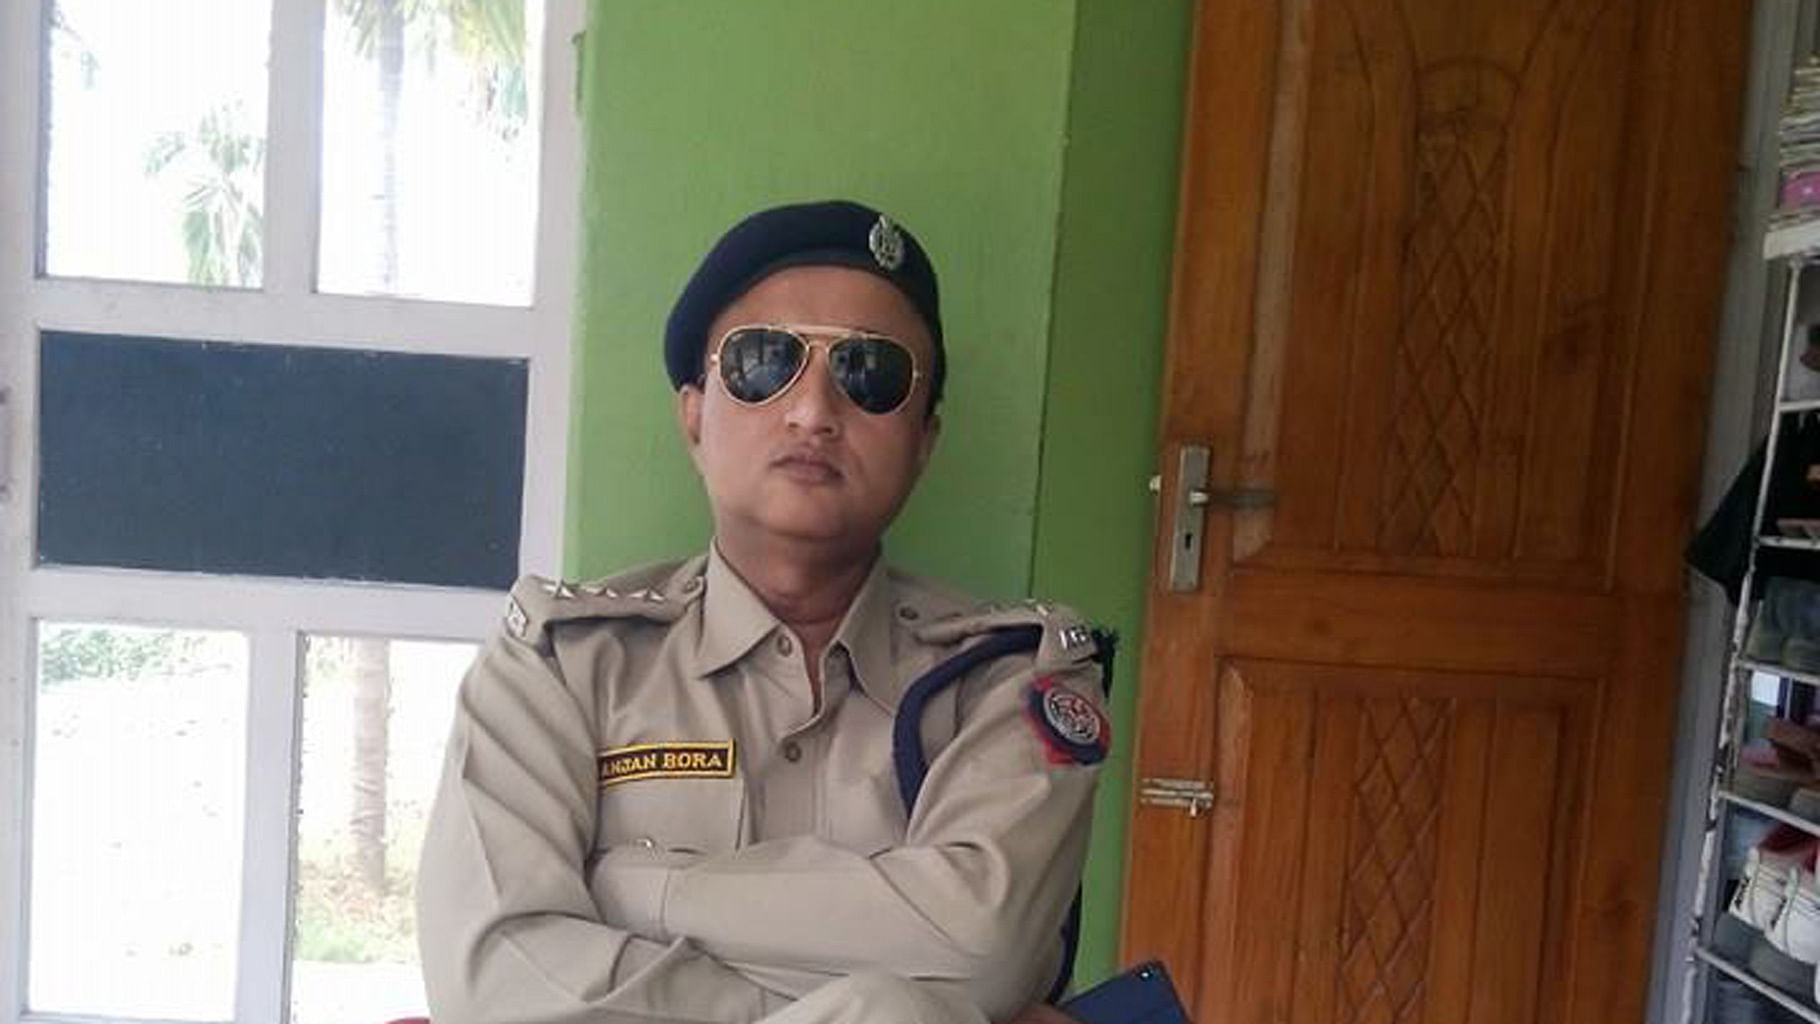 Assam Police DSP Anjan Bora. (Photo Courtesy: Facebook/<a href="https://www.facebook.com/anjan.bora.1">Anjan Bora</a>)